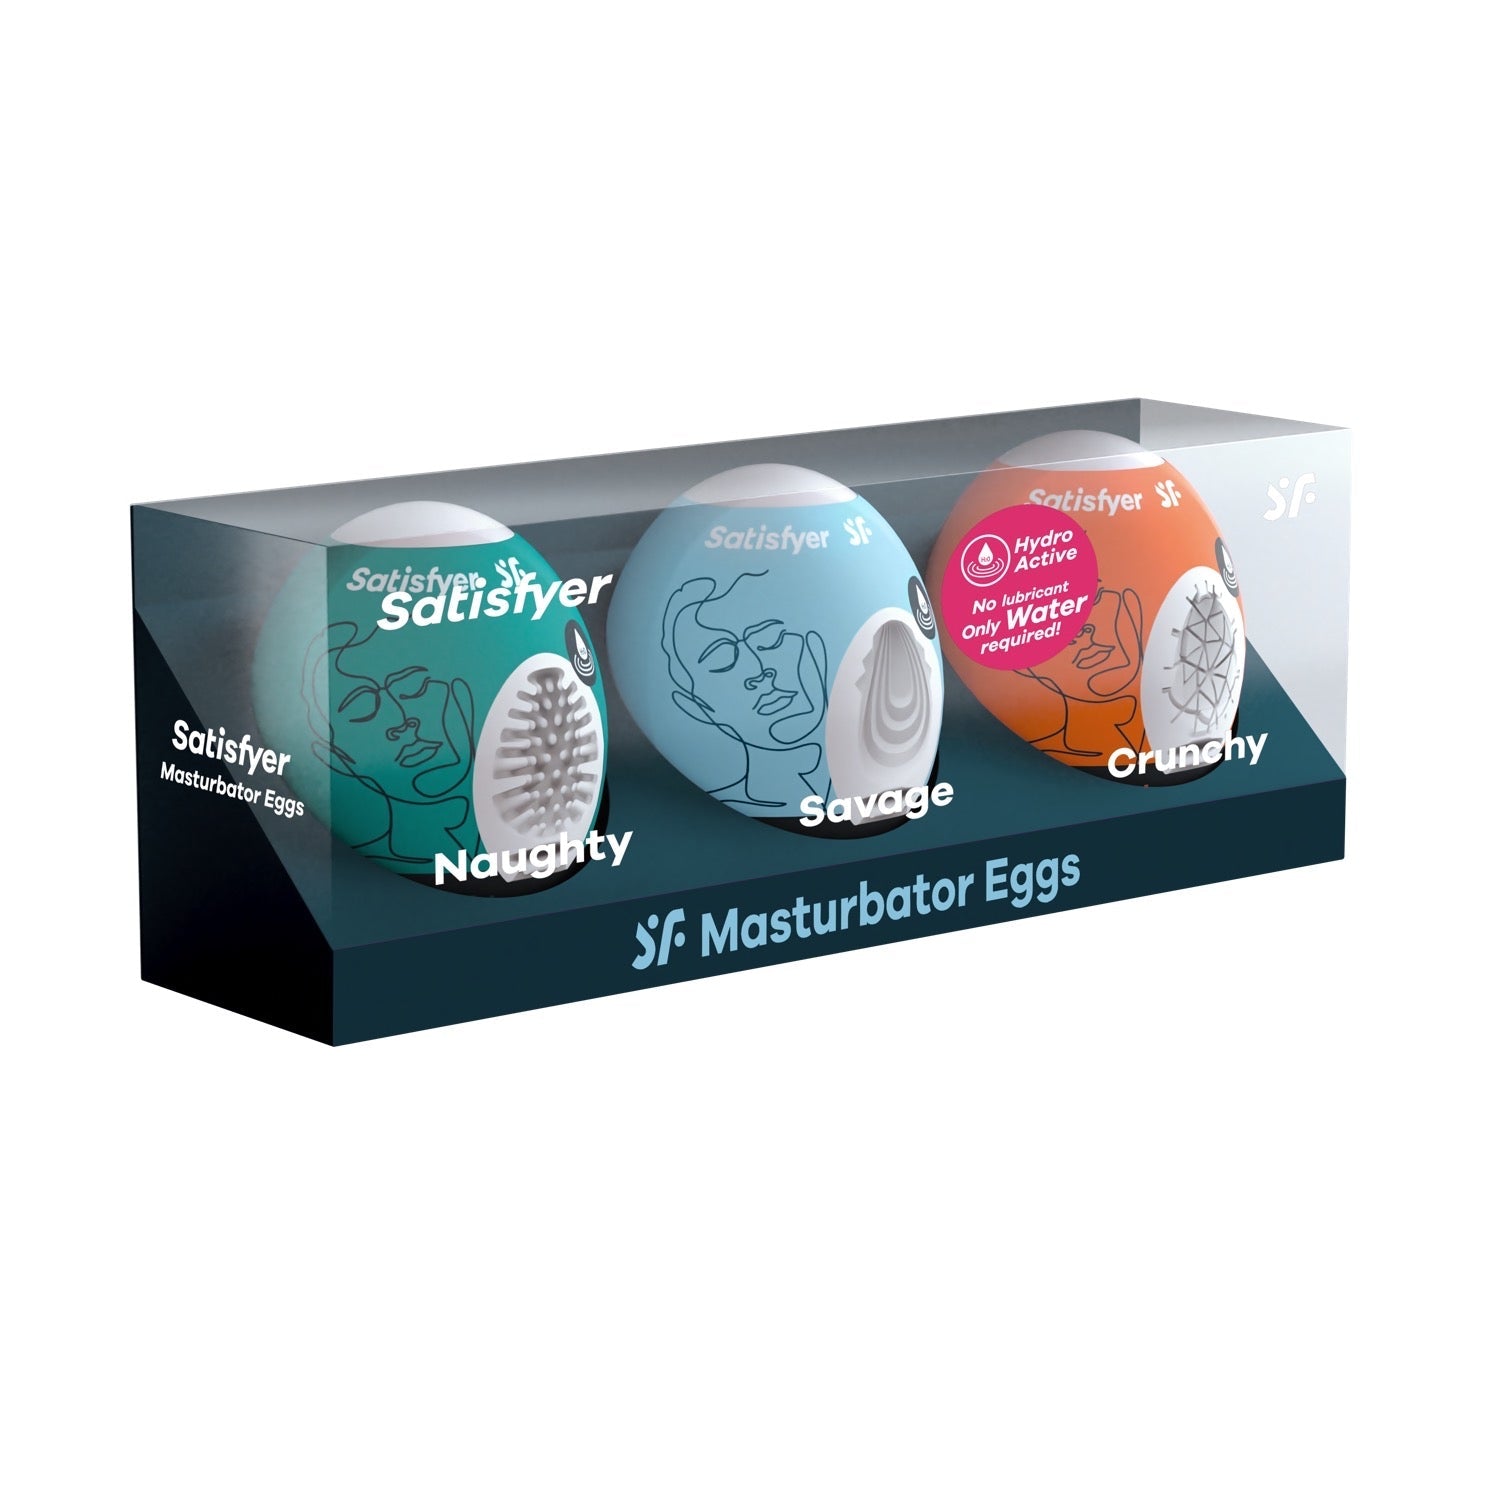 Satisfyer Masturbator Eggs - Mixed 3 Pack #2 - White by Satisfyer